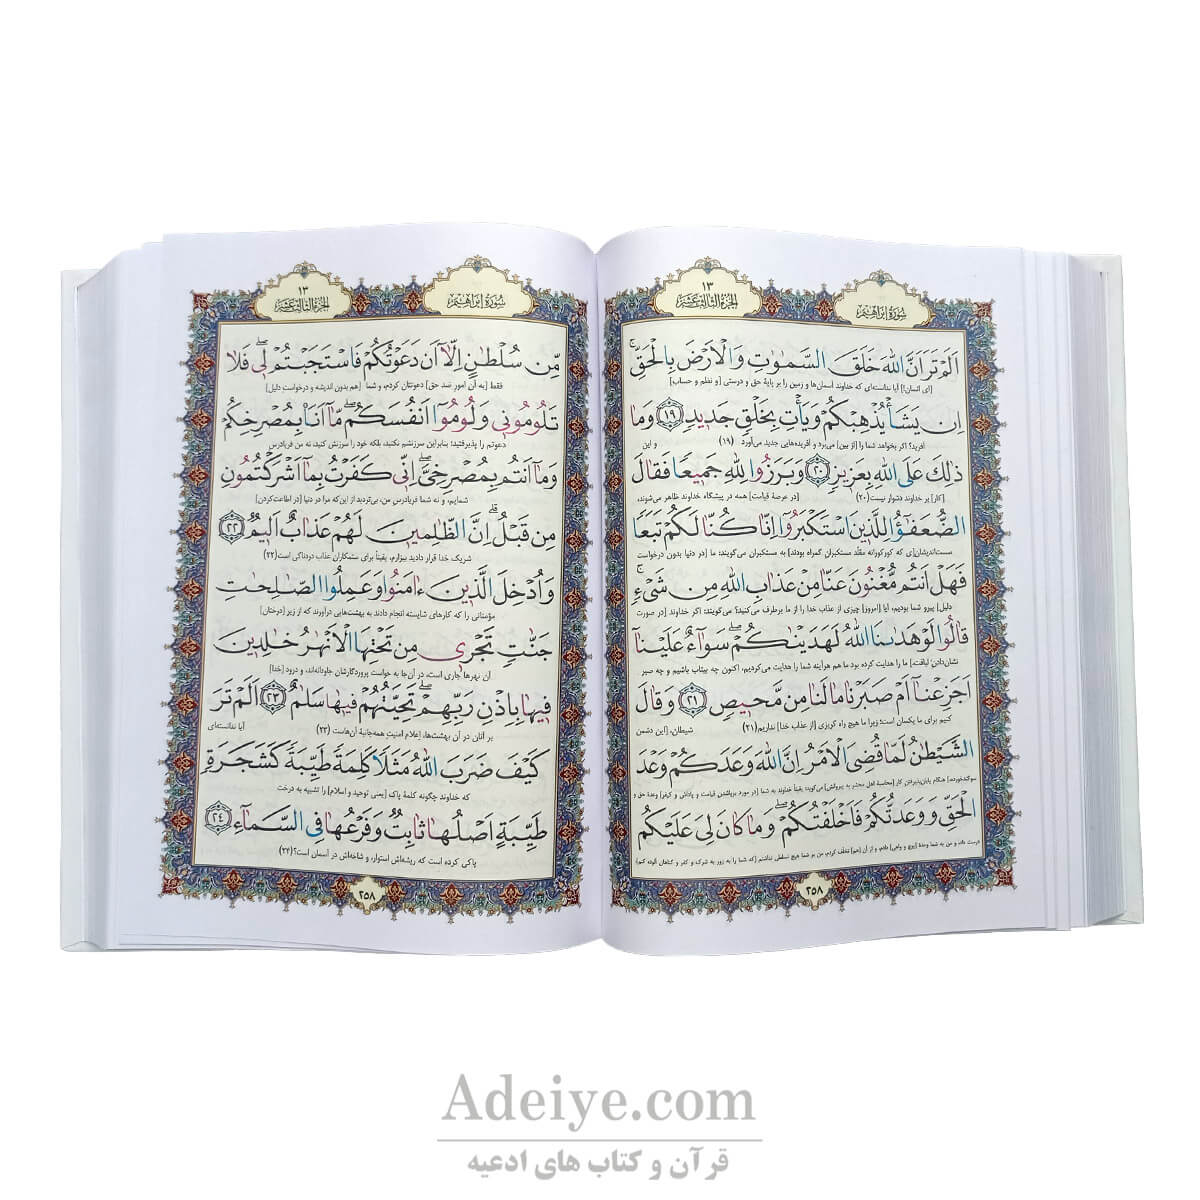 قرآن کامپیوتری نسیم با حروف رنگی عکس متن